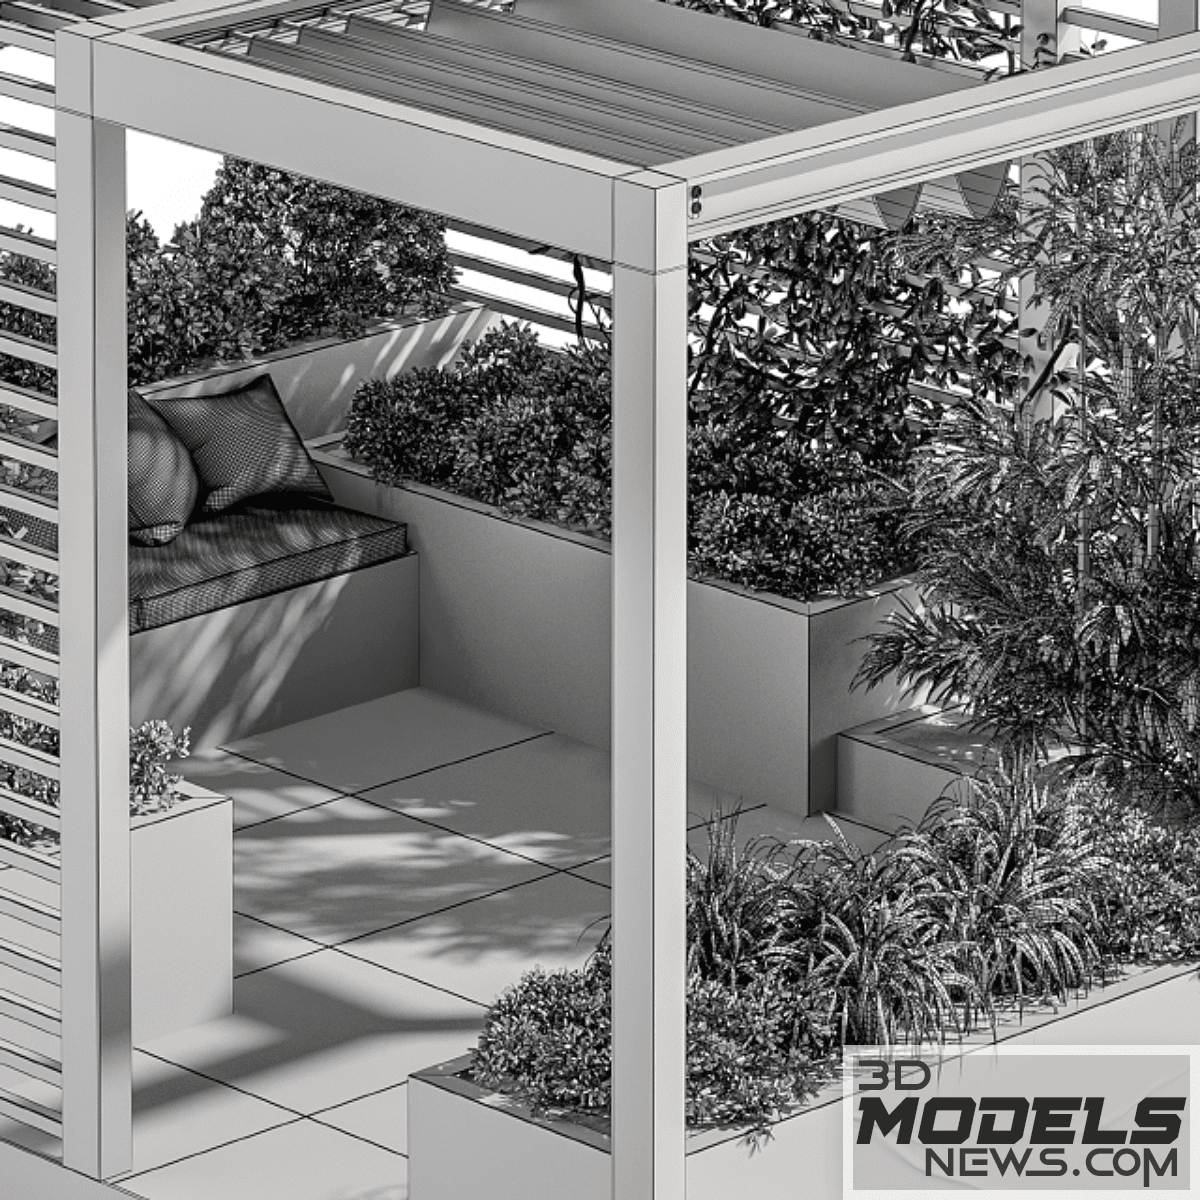 Roof Garden and Landscape Furniture with Pergola Model Set 38 5